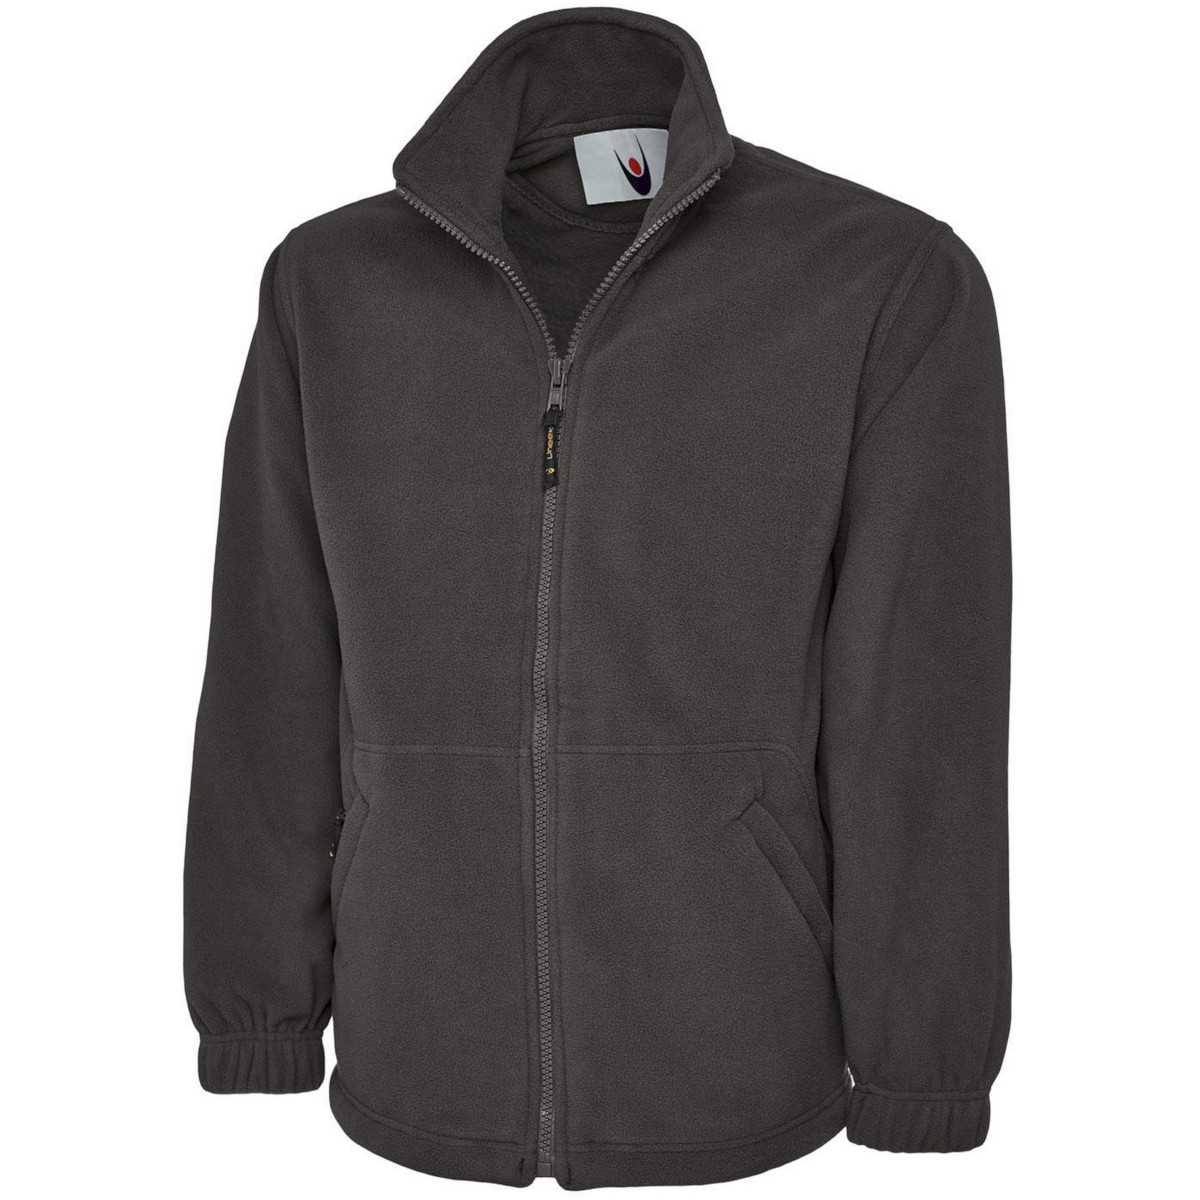 Uneek Fleece Jacket - Uneek Classic Adults Full Zip Fleece Jacket